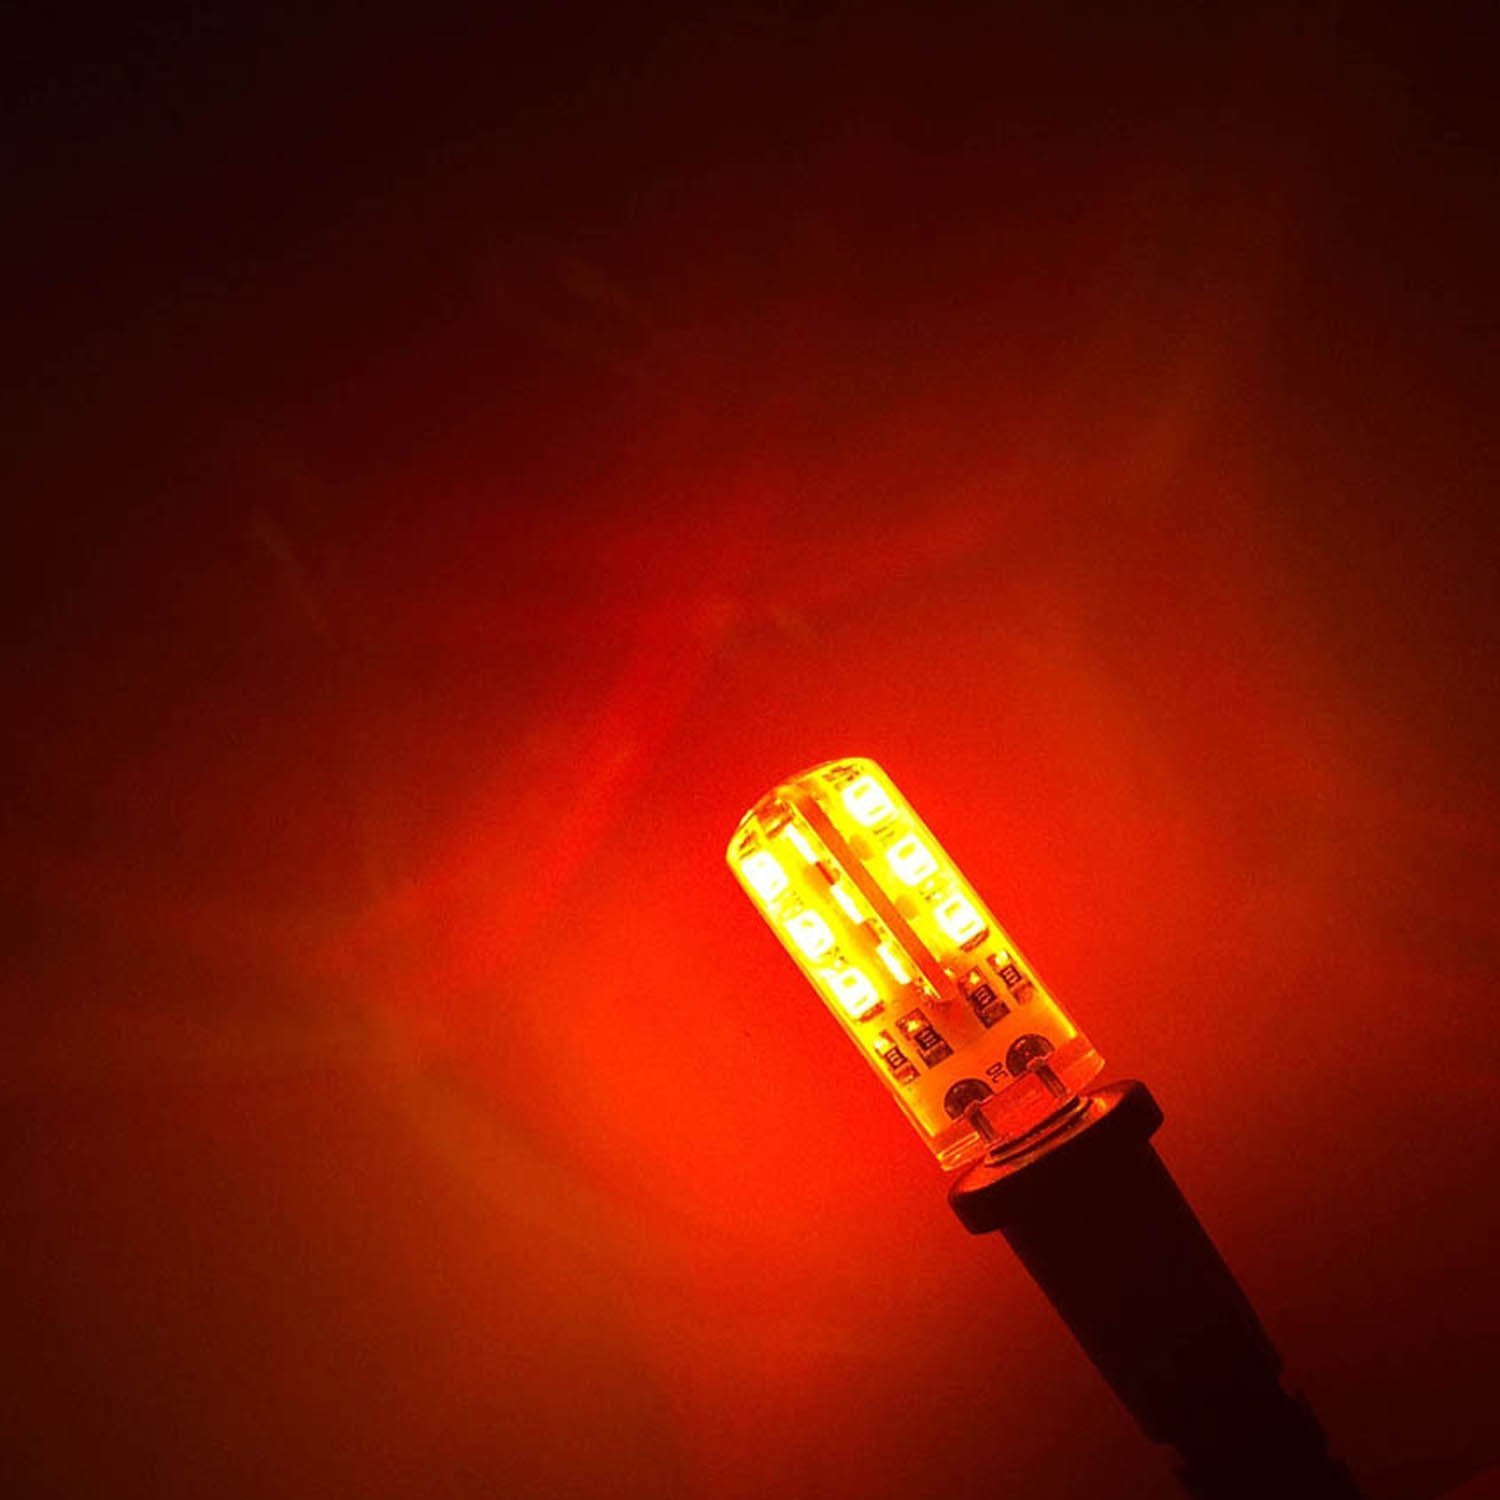 Amazon.com: fire effect ember orange flame simulation LED light kit ...